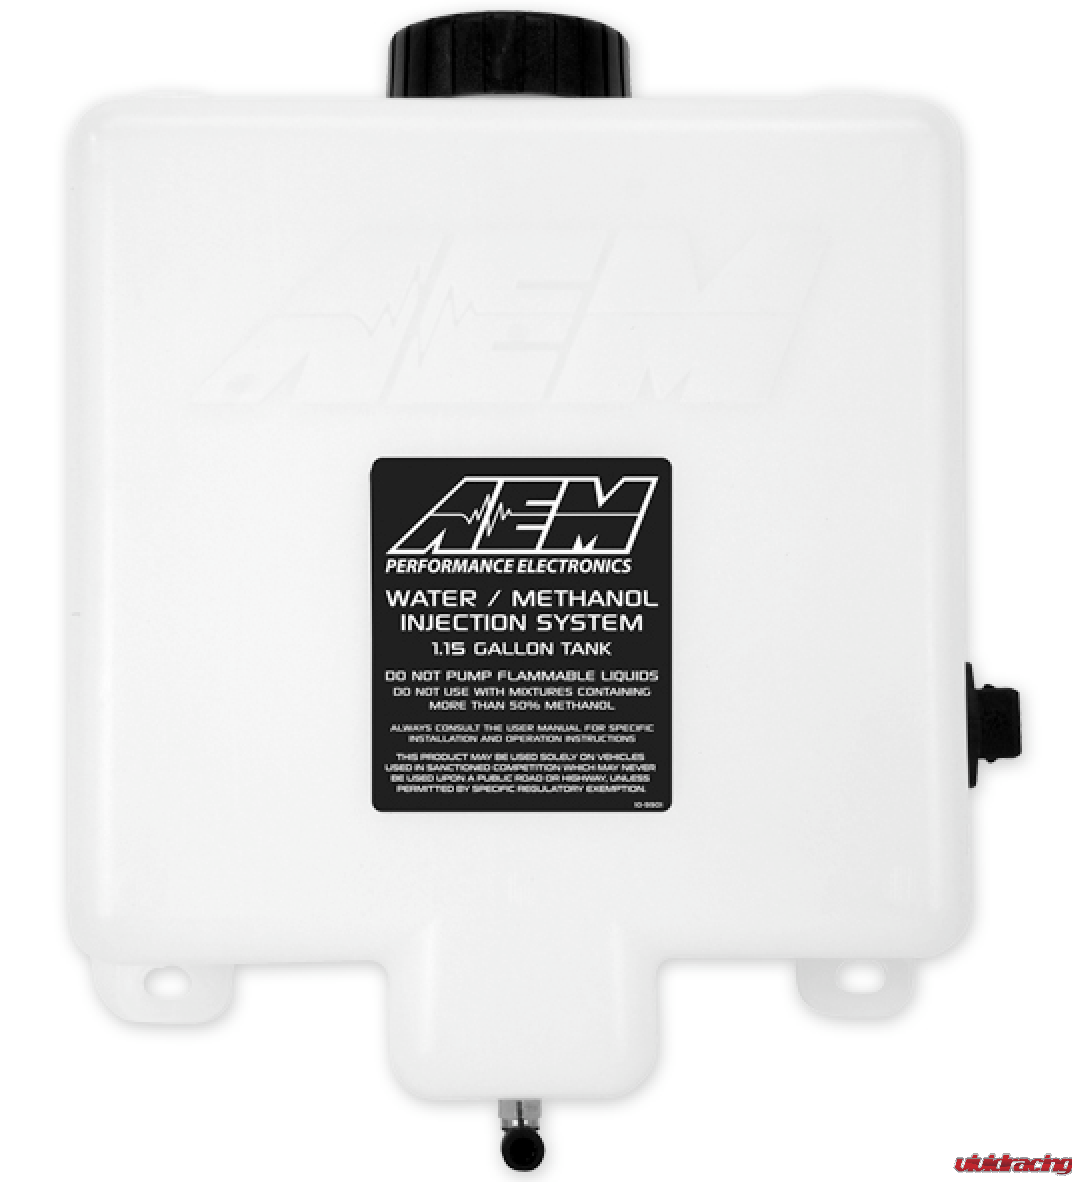 AEM, water methanol injection tank gallon